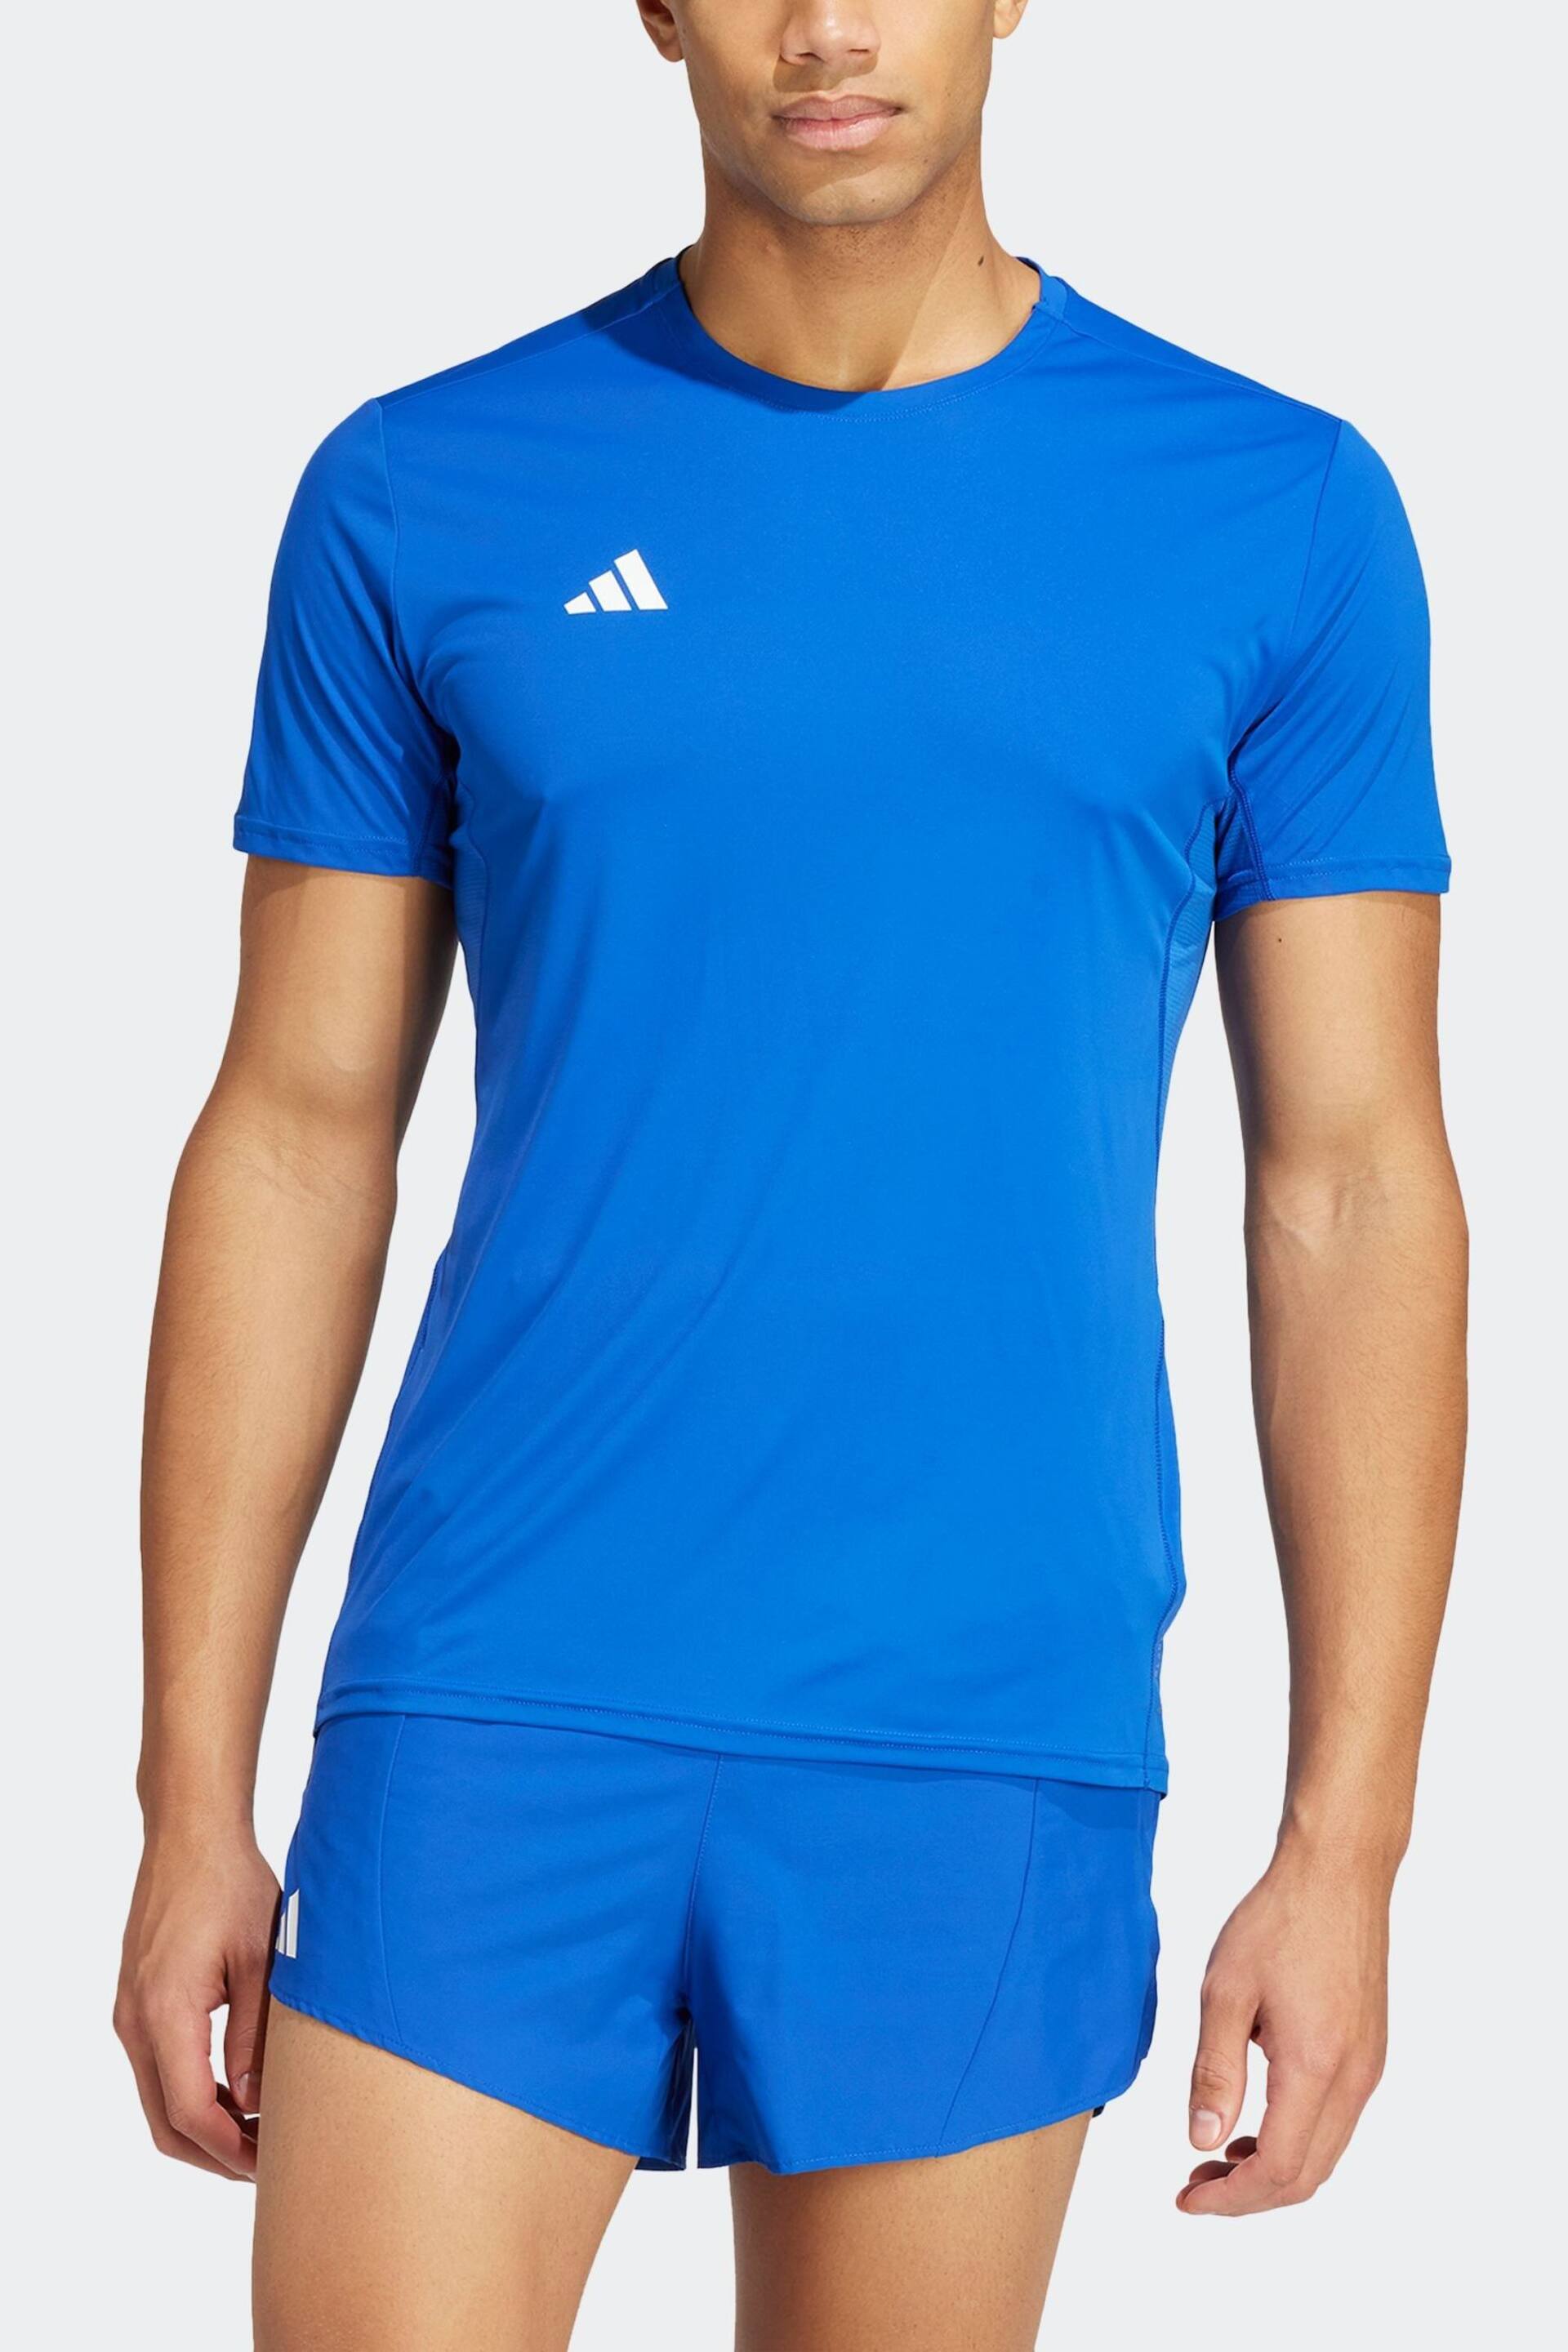 adidas Bright Blue Adizero Essentials Running T-Shirt - Image 5 of 17